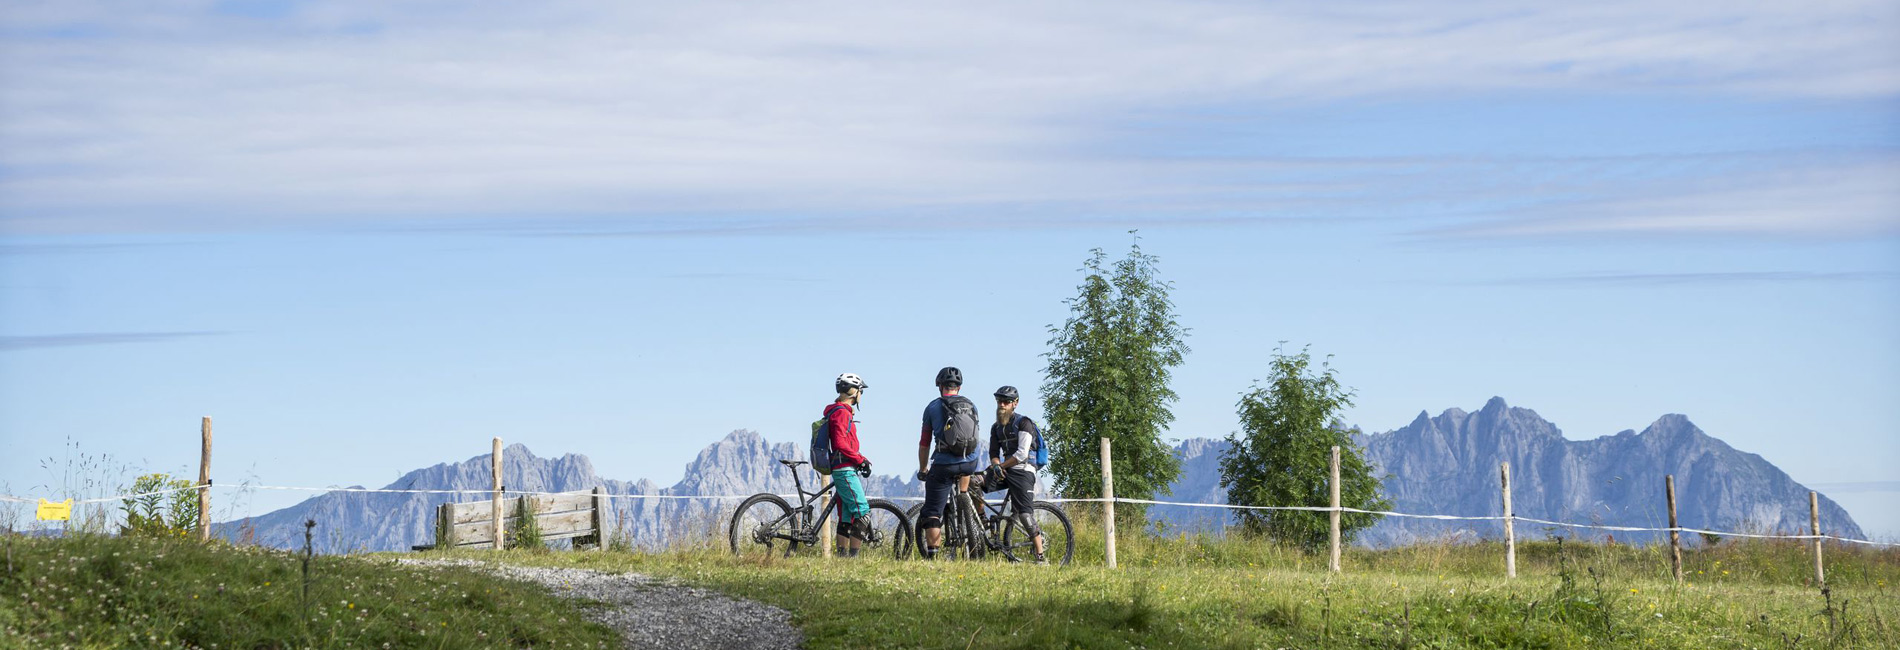 Gemütliche Bikepause - Bikepark Kirchberg Gaisberg in Tirol - copyright Tirol Werbung / Neusser Peter